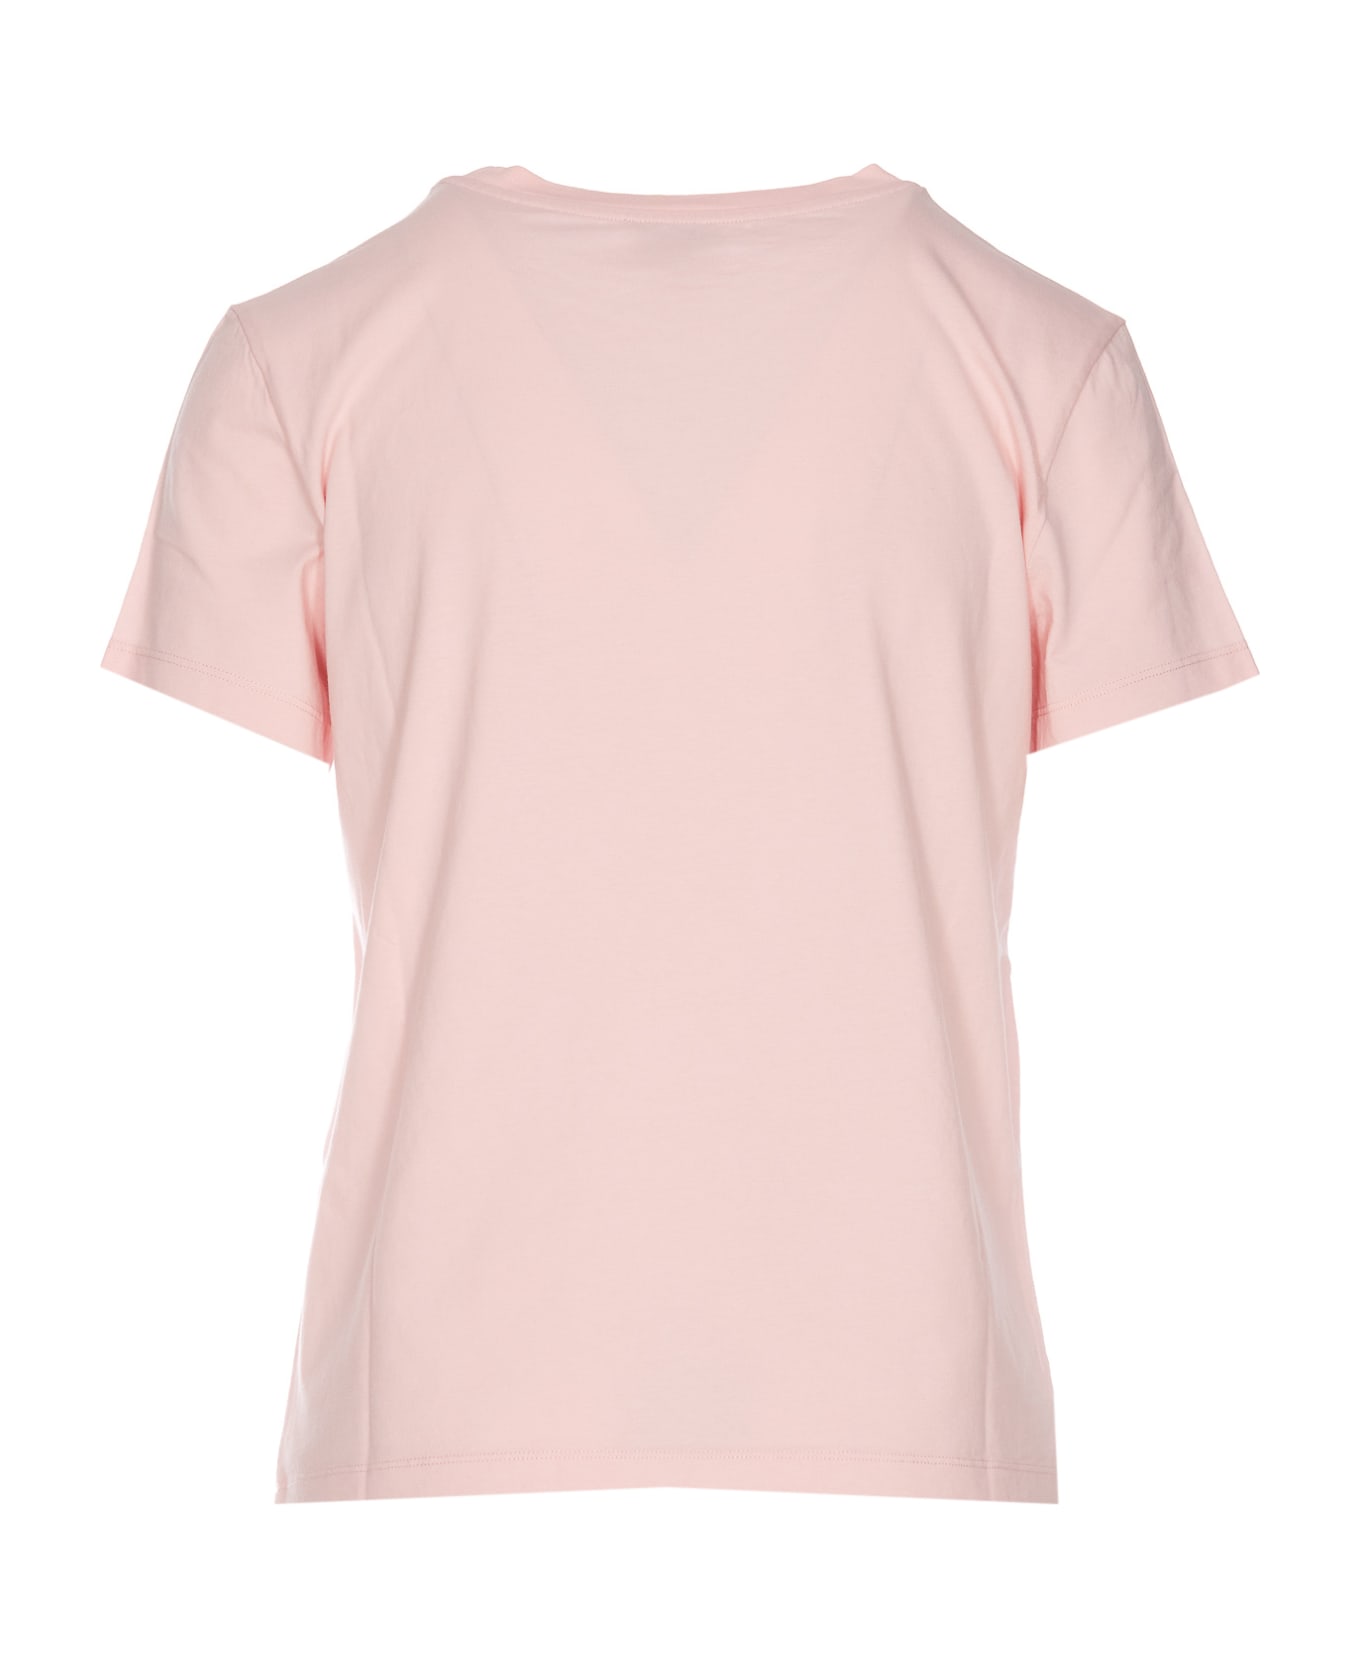 Kenzo Boke Flower Crest T-shirt - Rose Clair Tシャツ